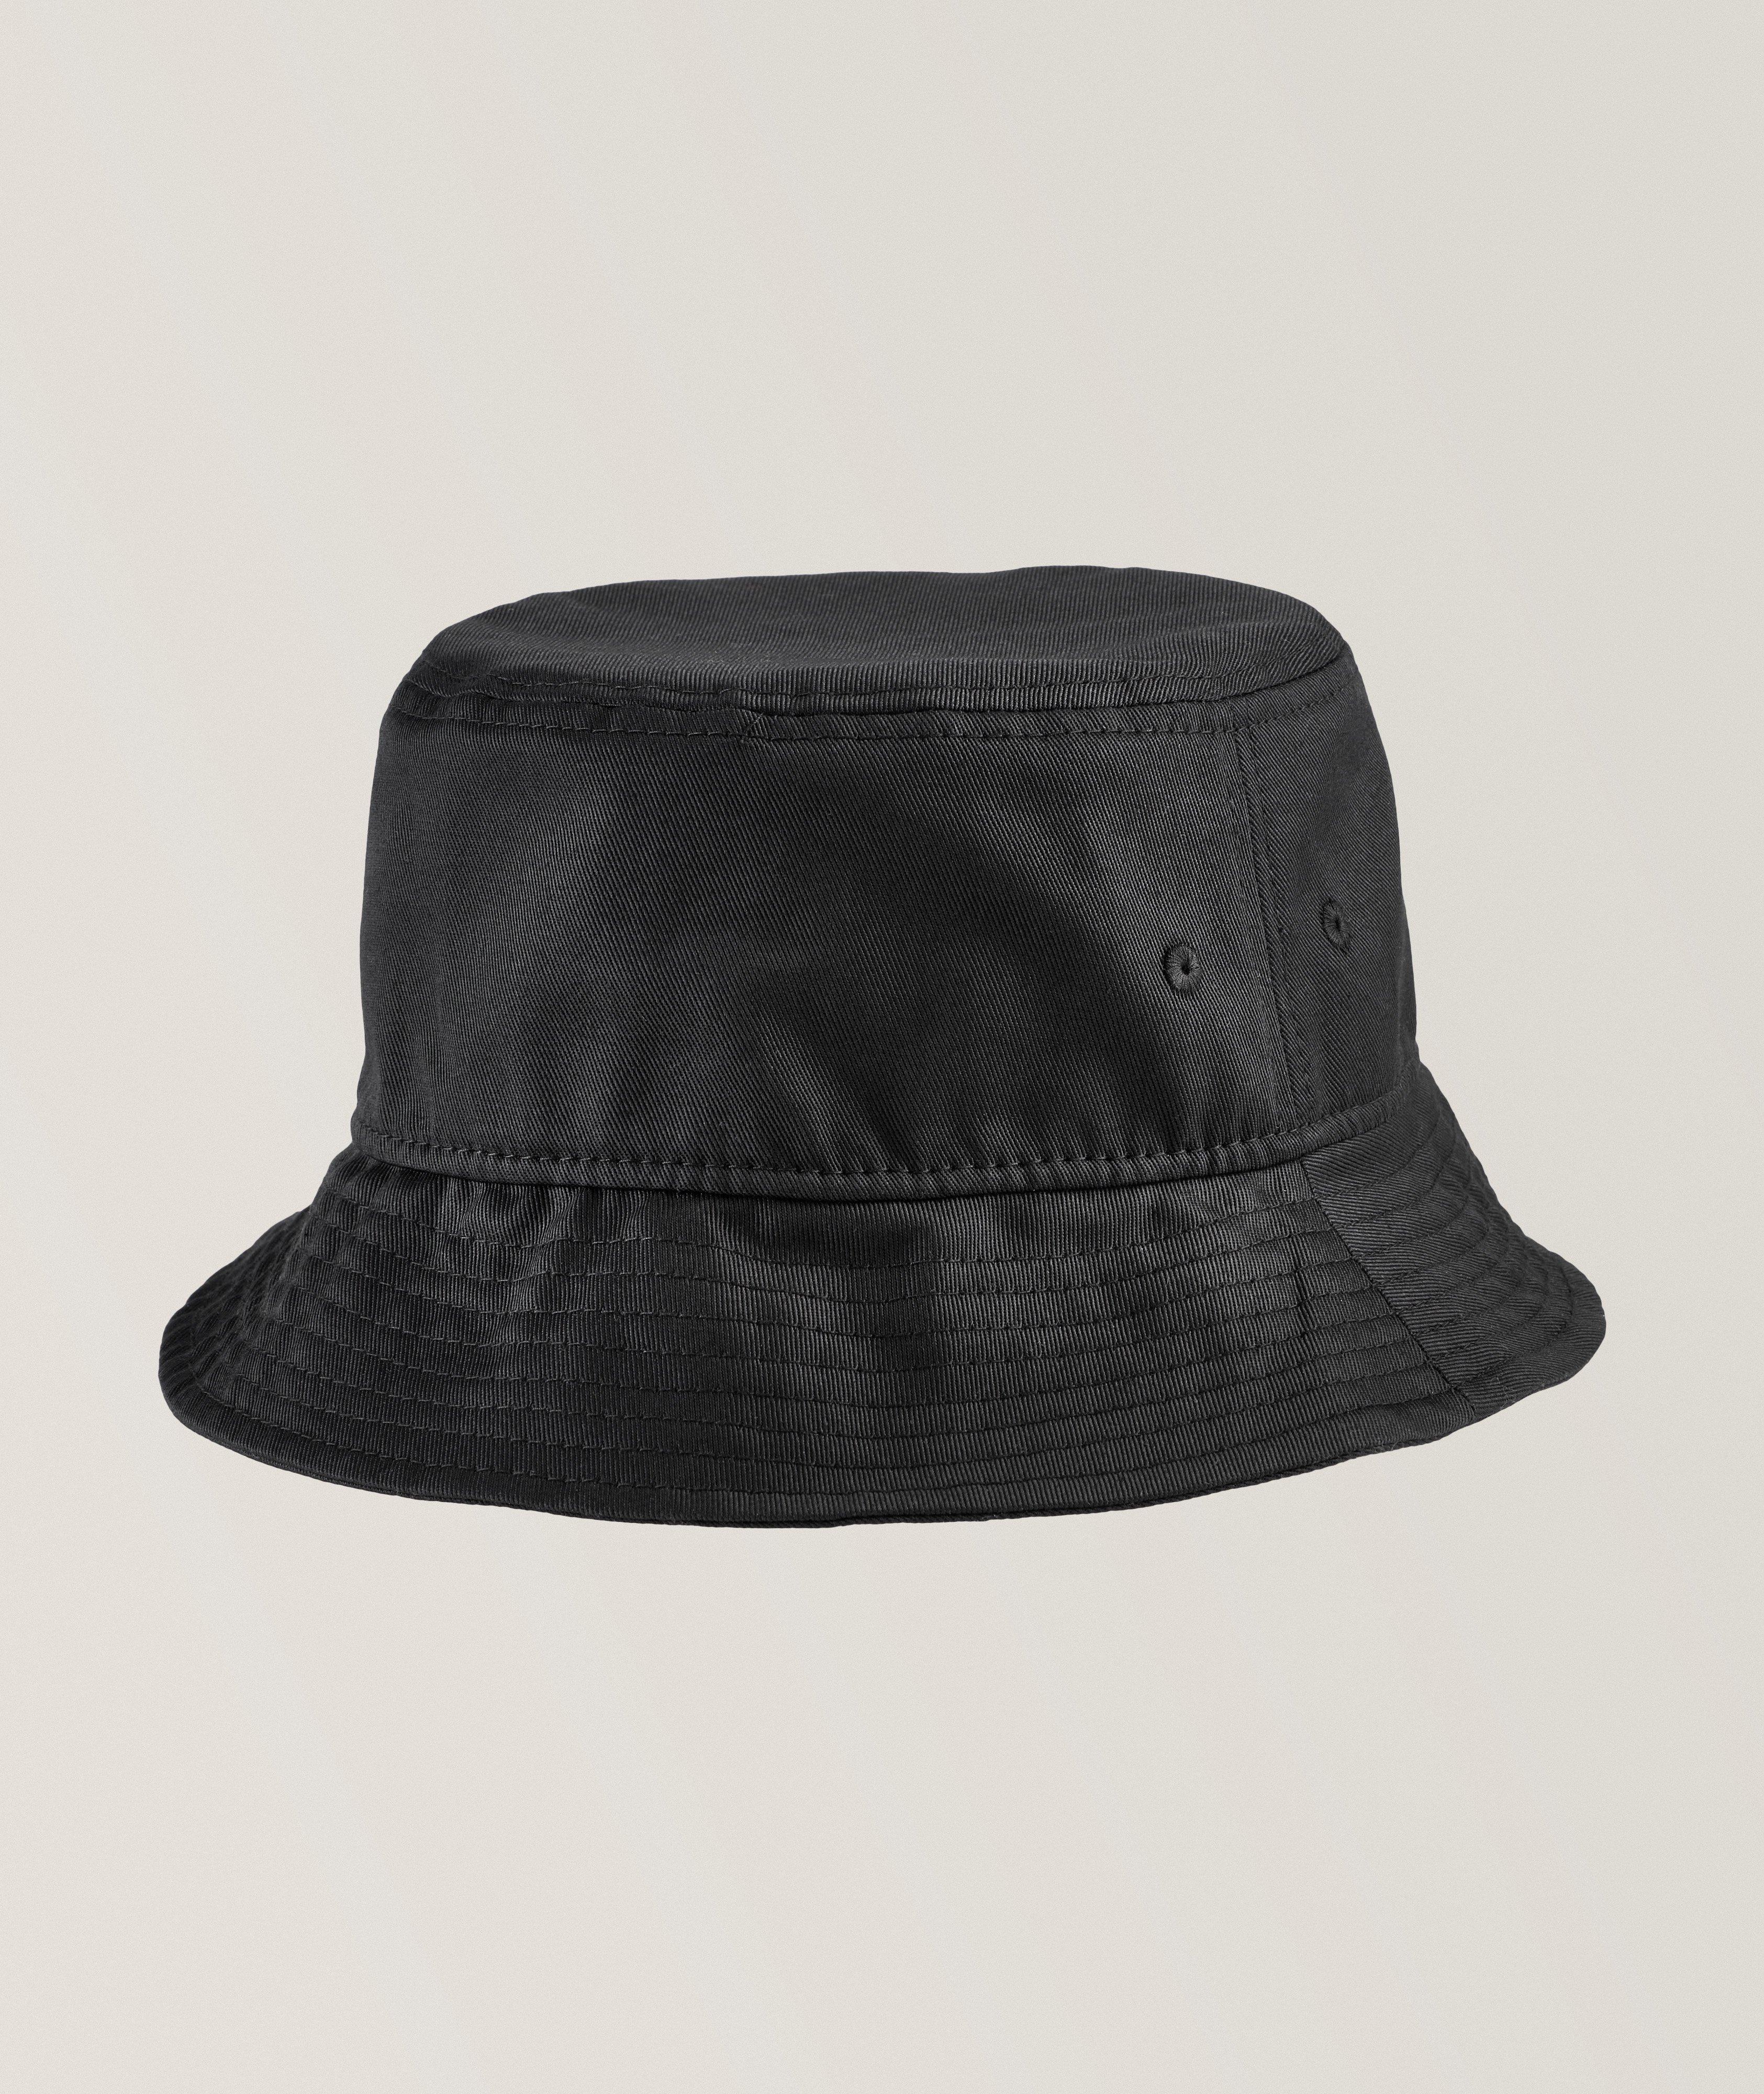 Saul B Iconic Cotton Bucket Hat image 1